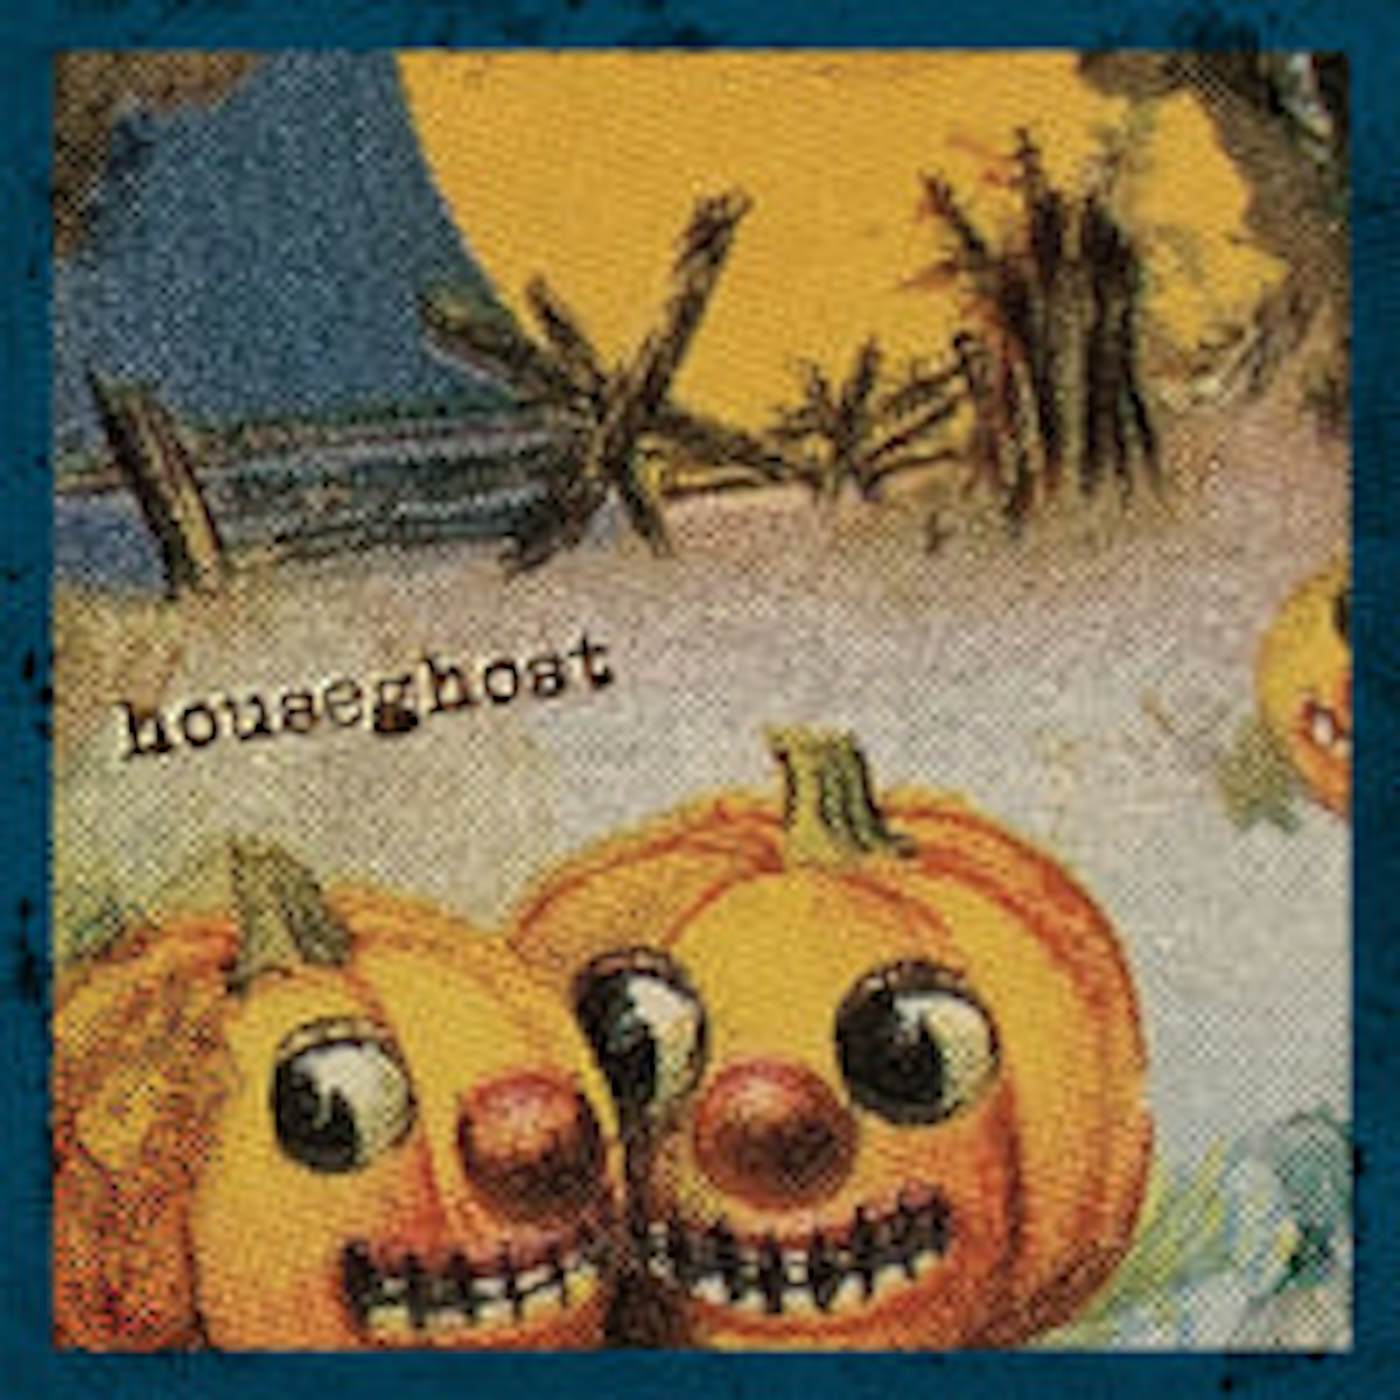 Houseghost LP - Houseghost (Vinyl)